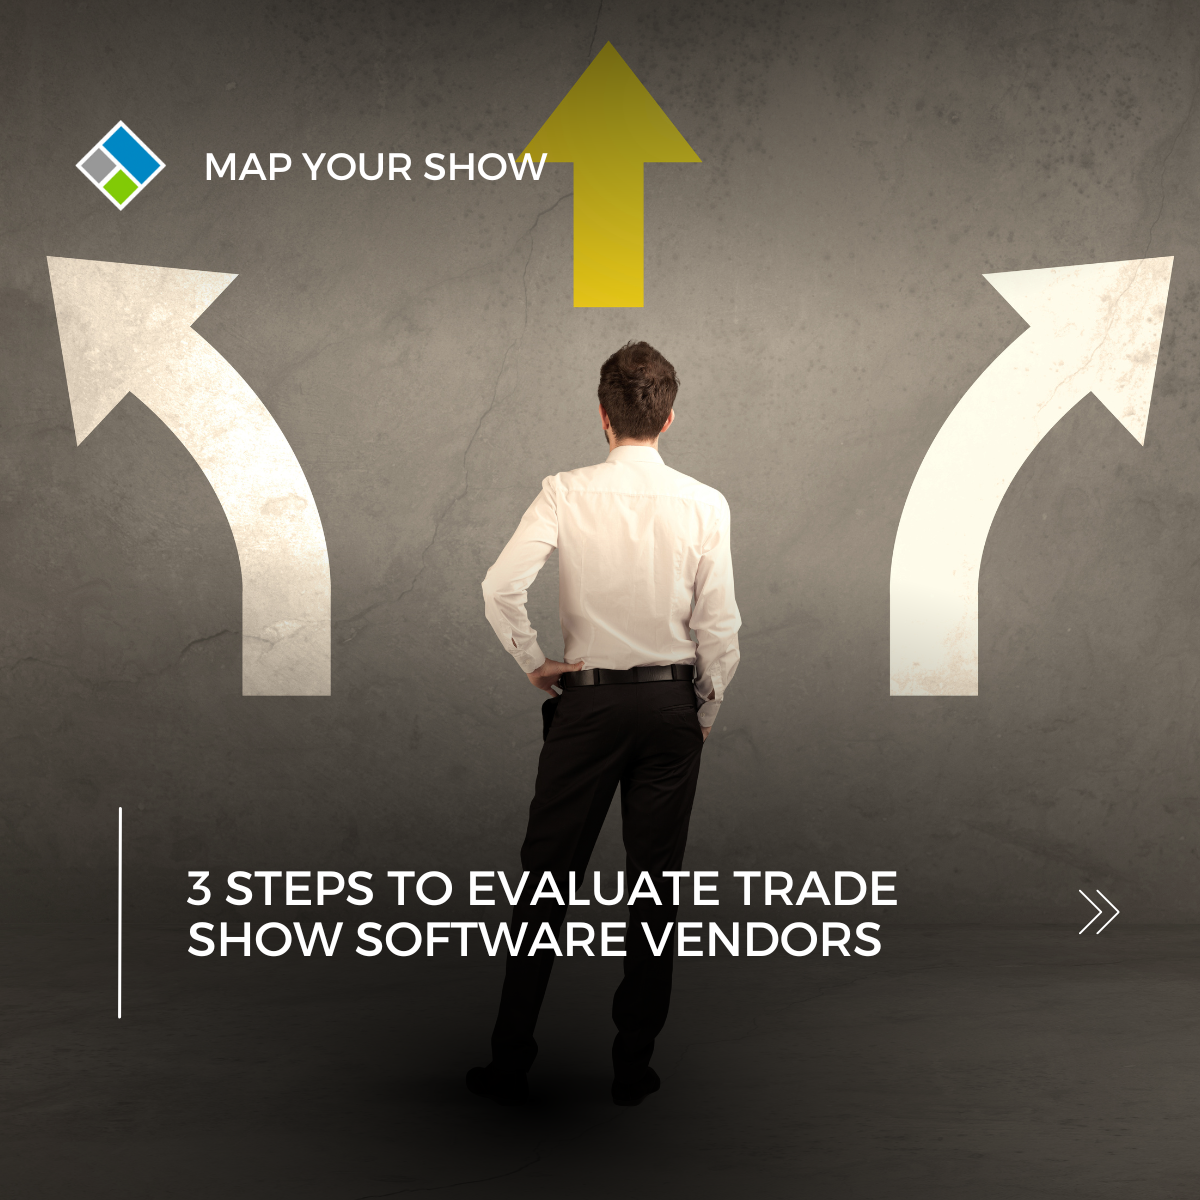 3 Steps to Evaluate Trade Show Software Vendors. Map Your Show, Event Management Technology Platform